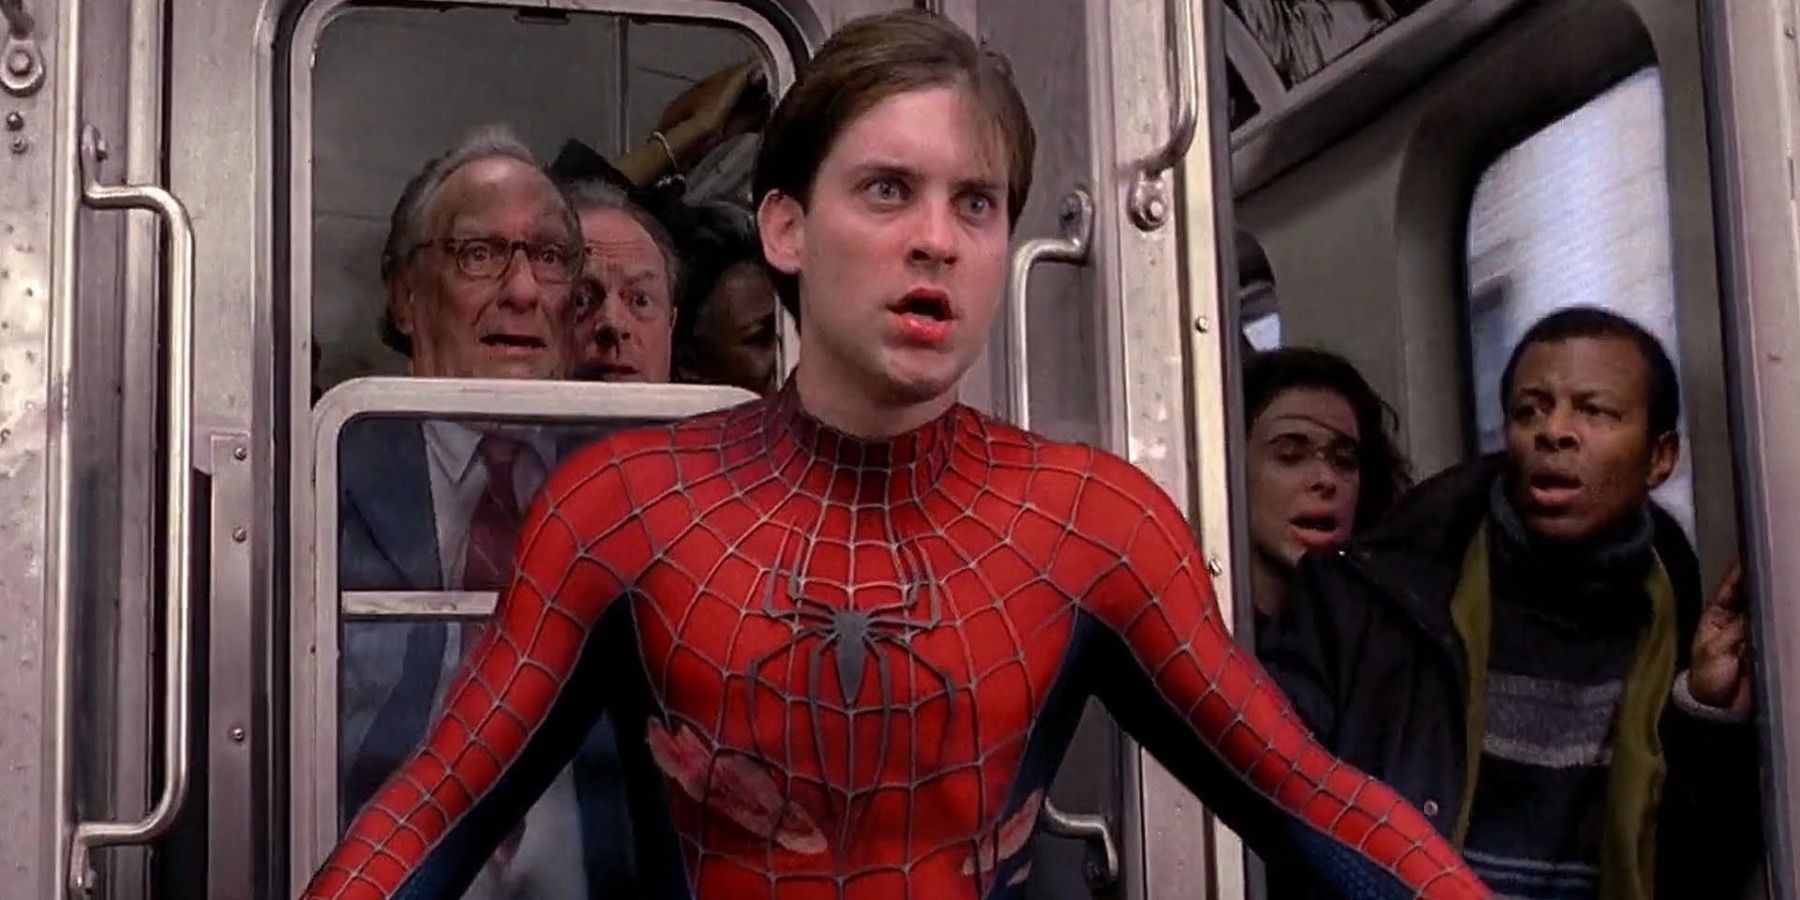 Tobey Maguire in Spider-Man-2 train scene